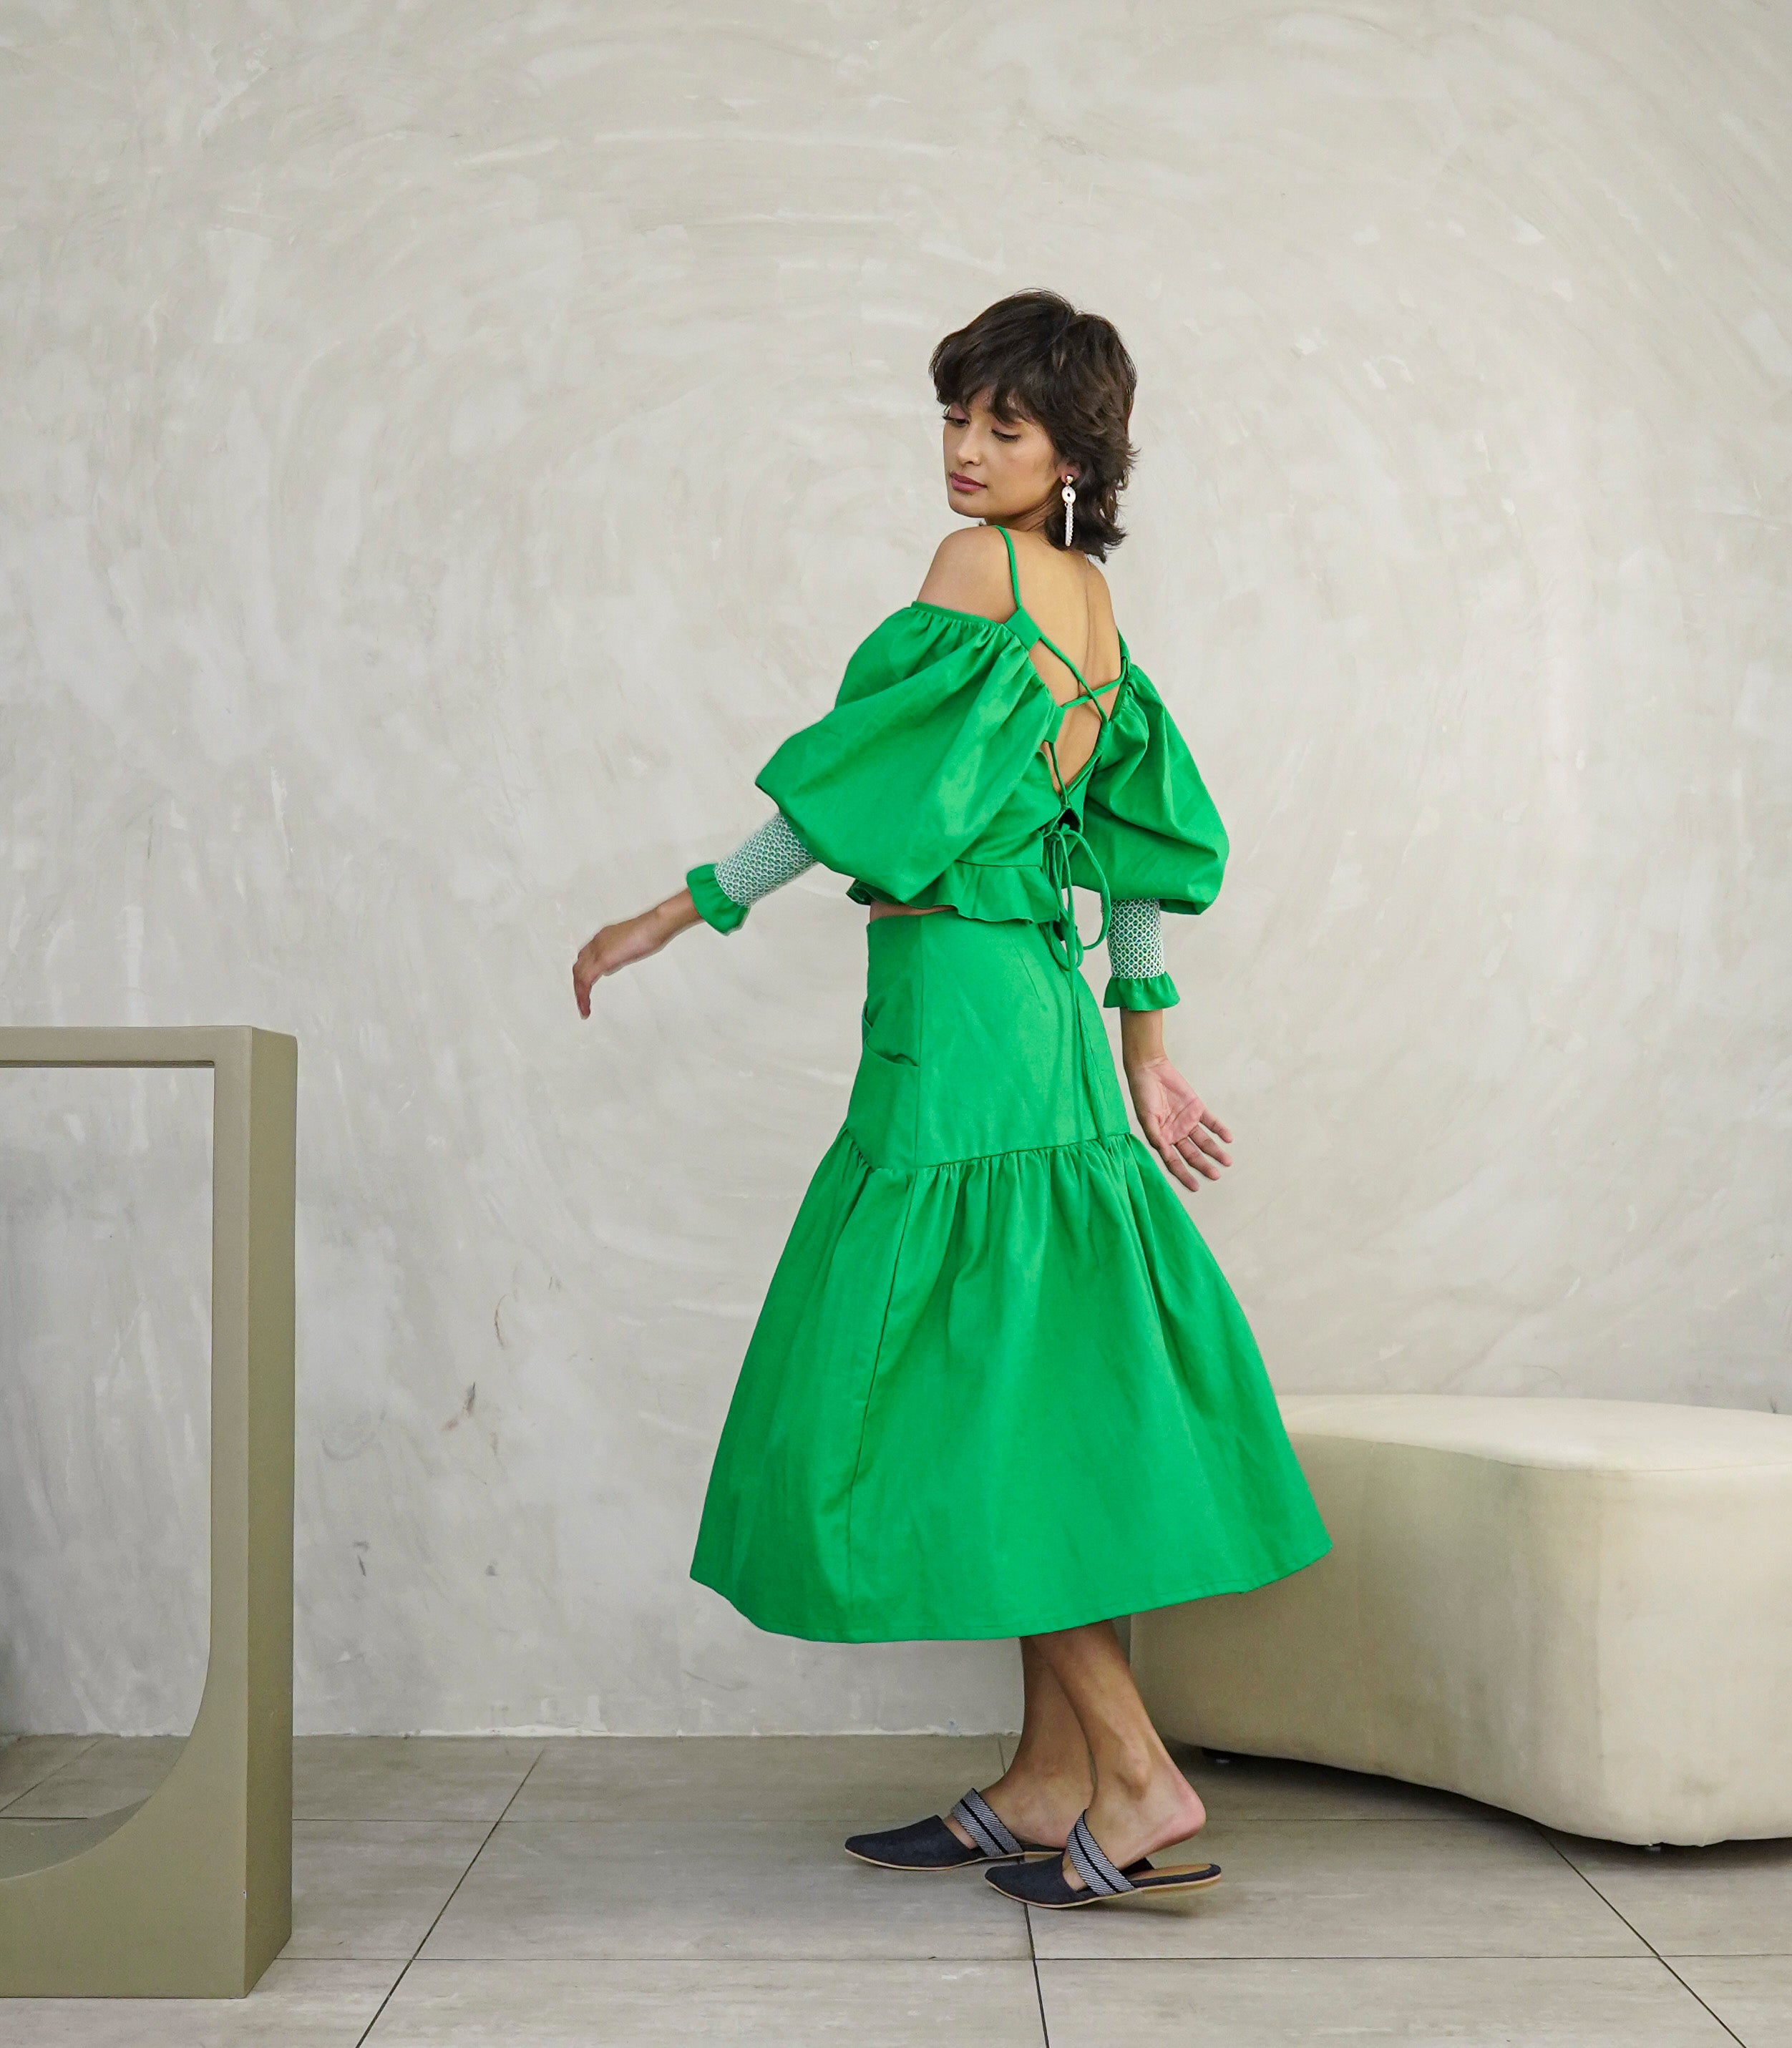 Bossa Midi Skirt (Emerald)